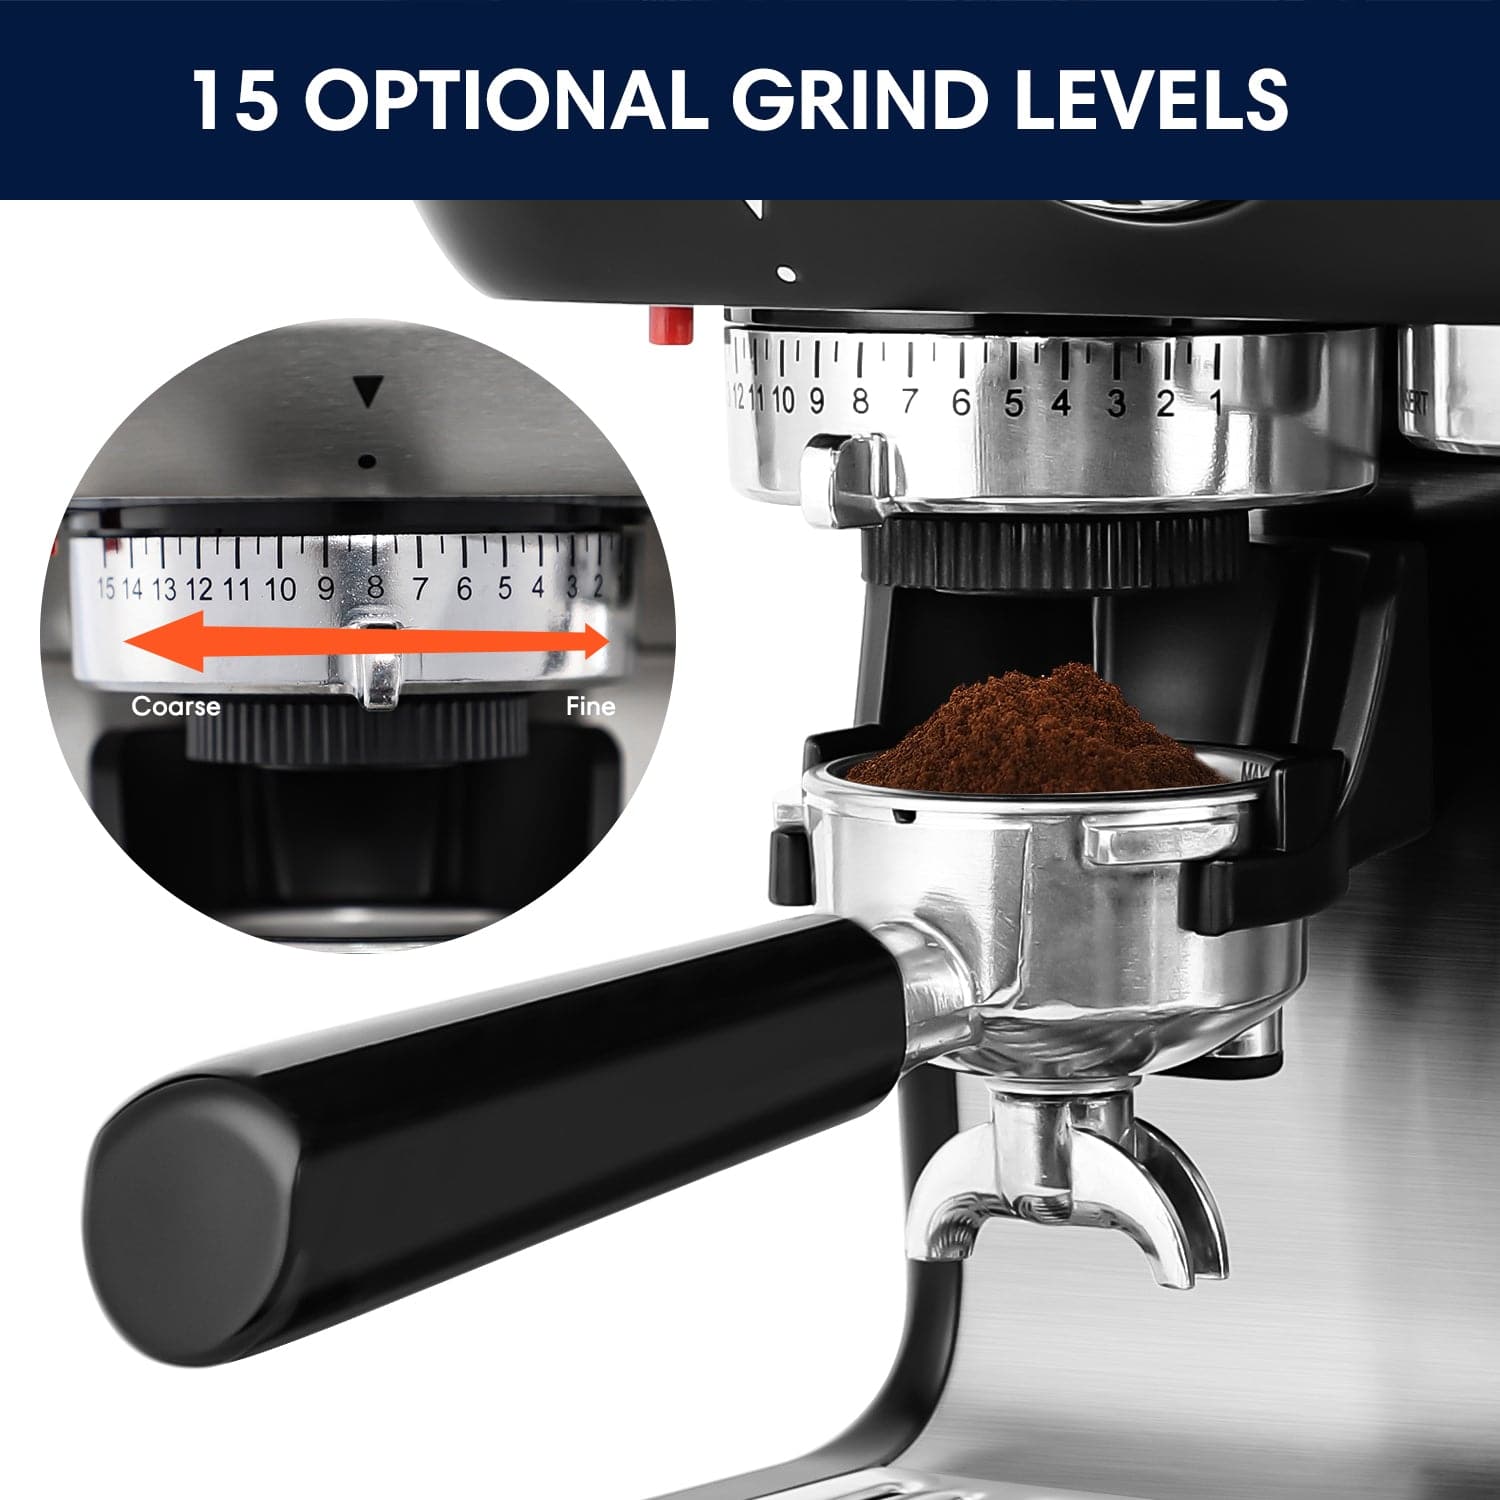 Sincreative CM5700BK Espresso machine with grinder and milk frother all in one espresso machine